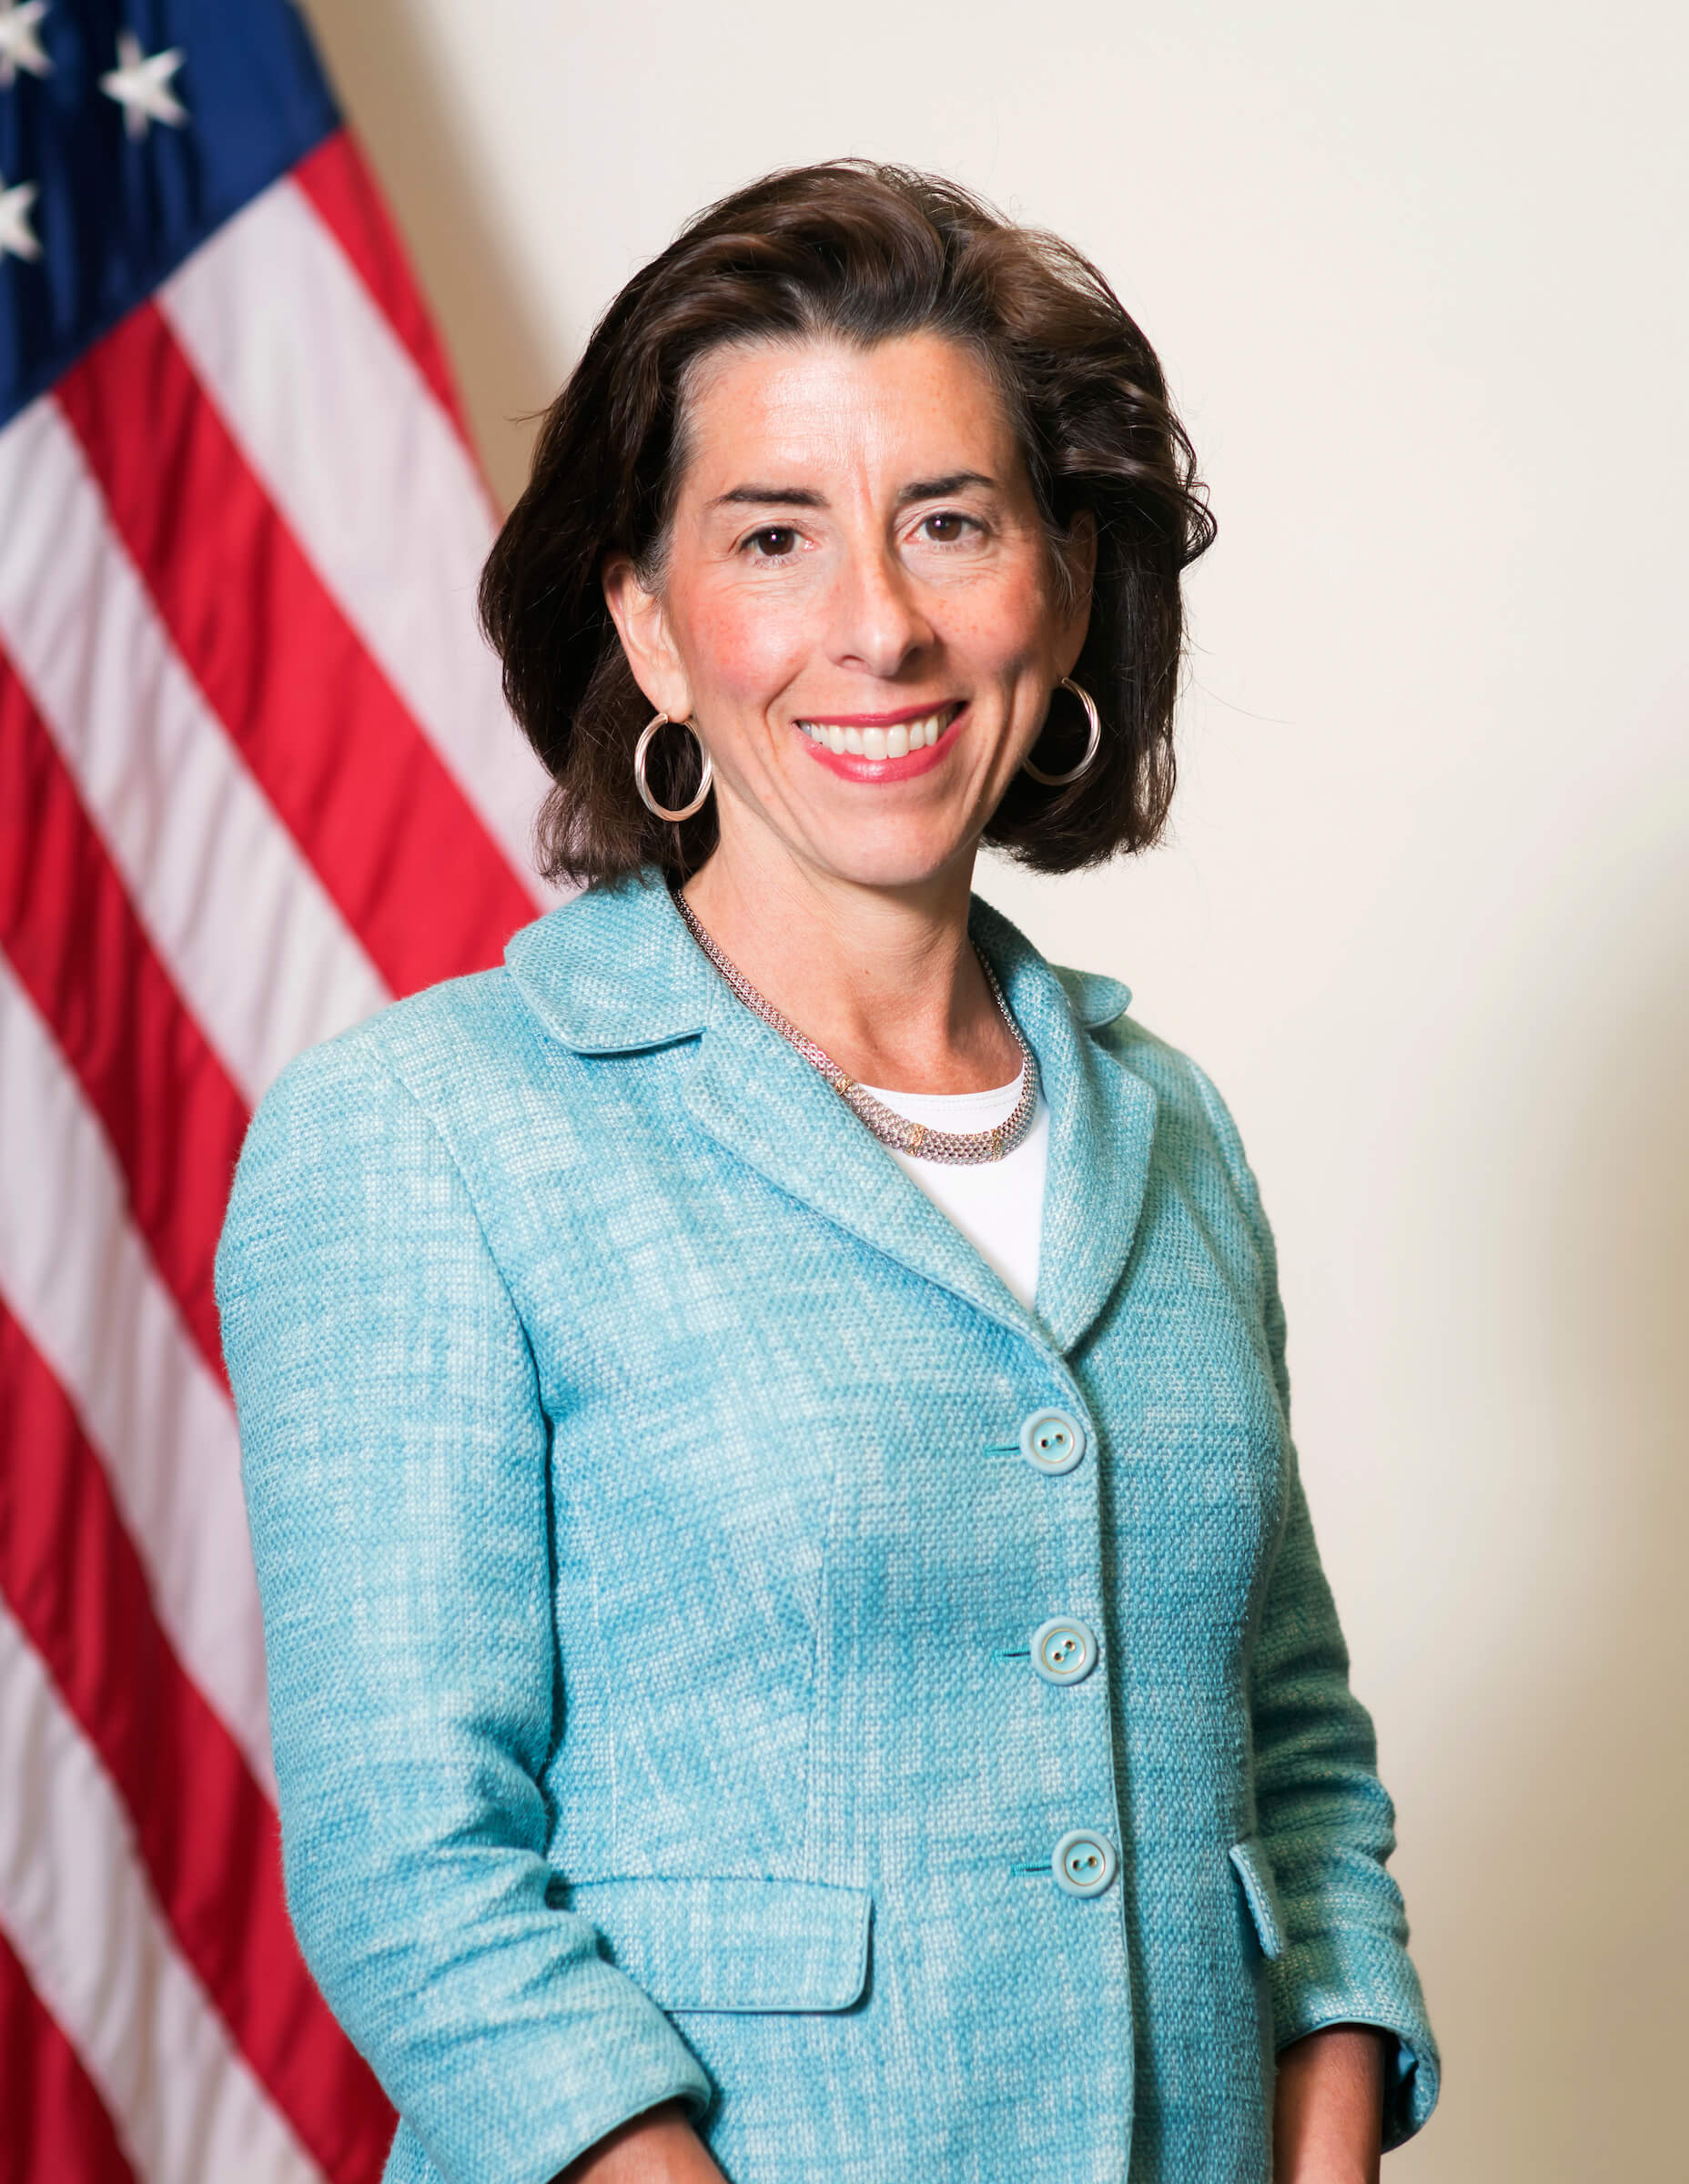 The Honorable Gina M. Raimondo Secretary, U.S. Department of Commerce